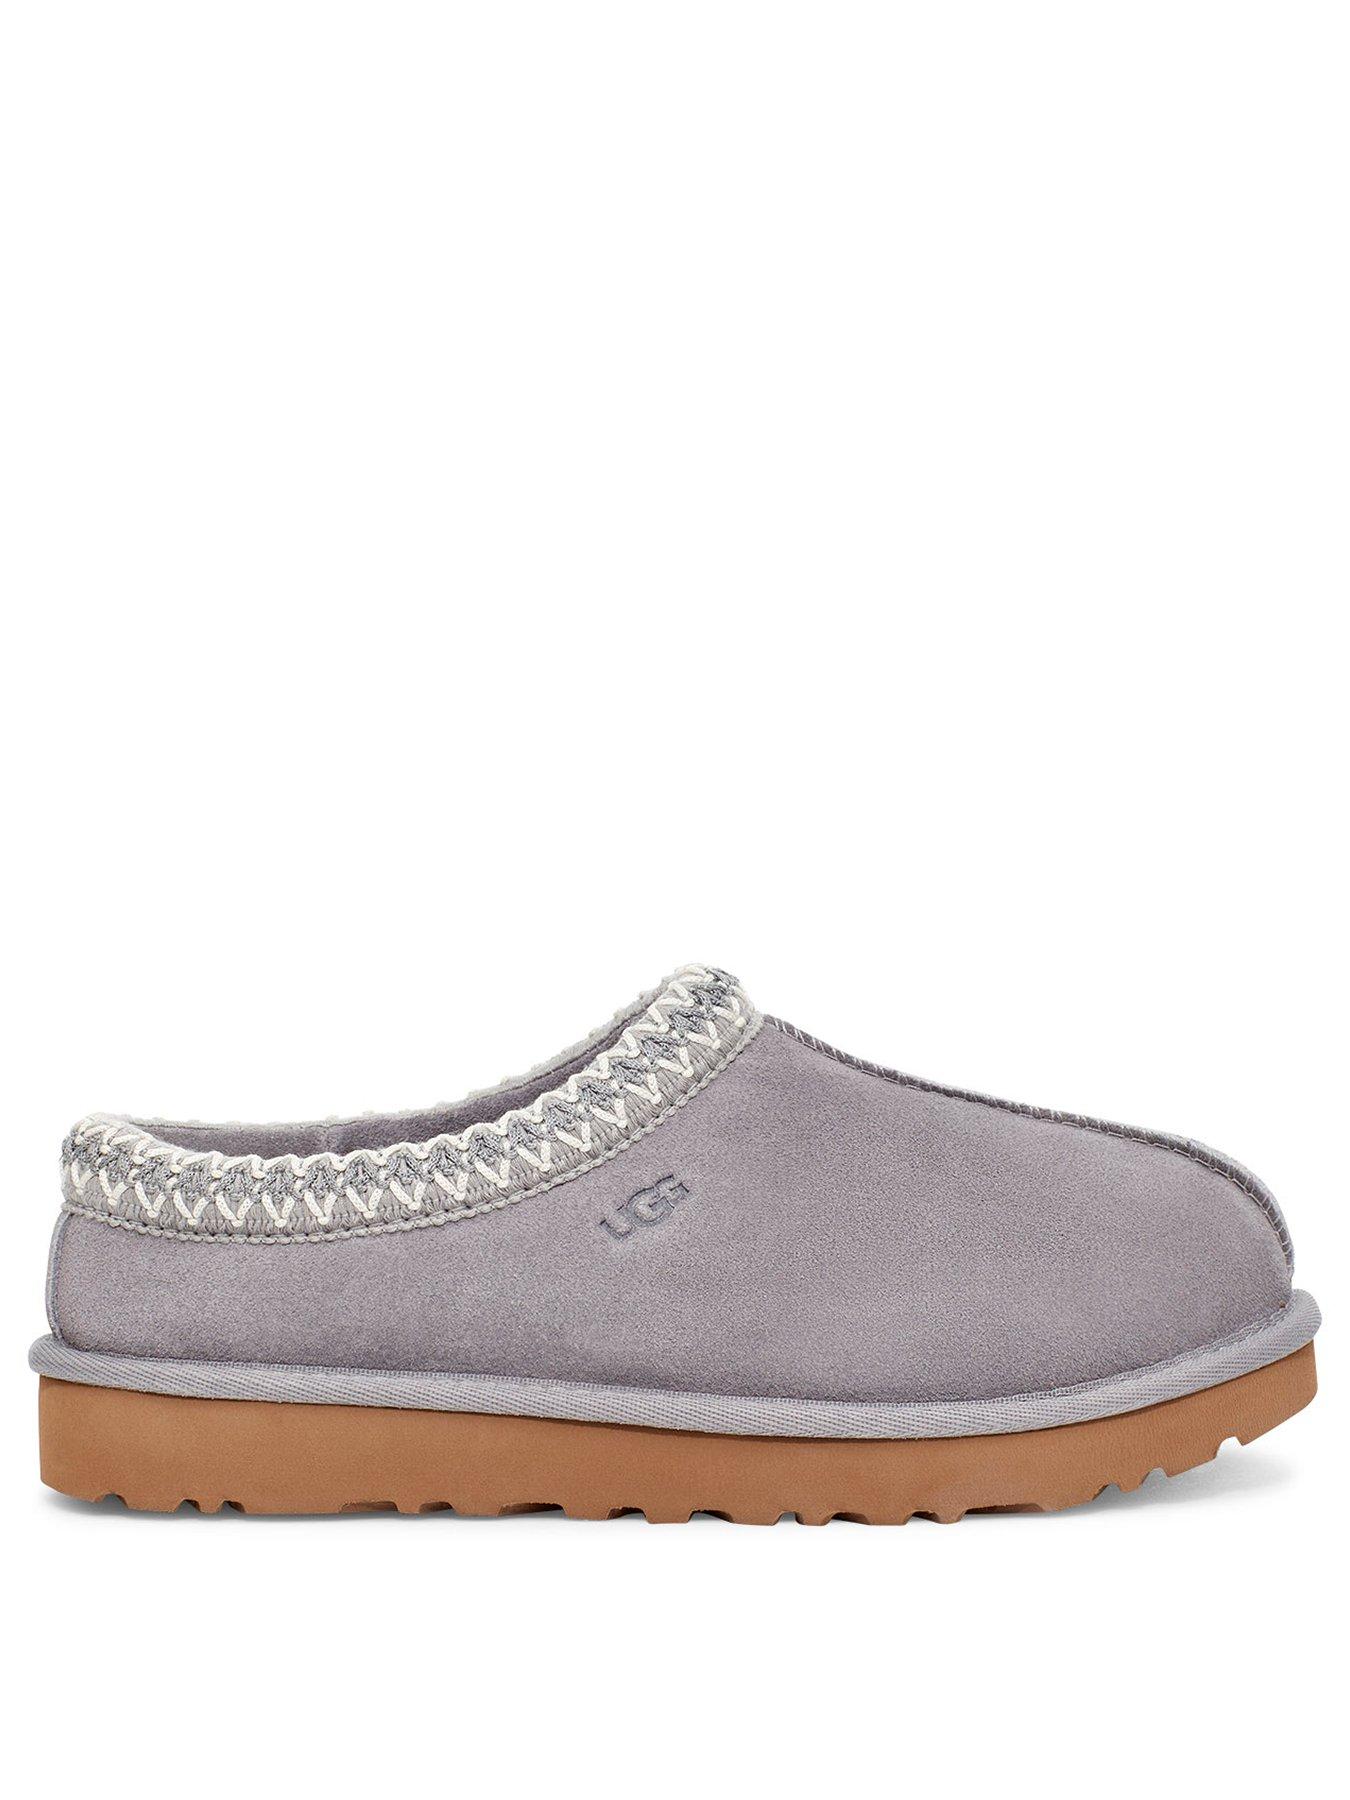 light grey ugg slippers